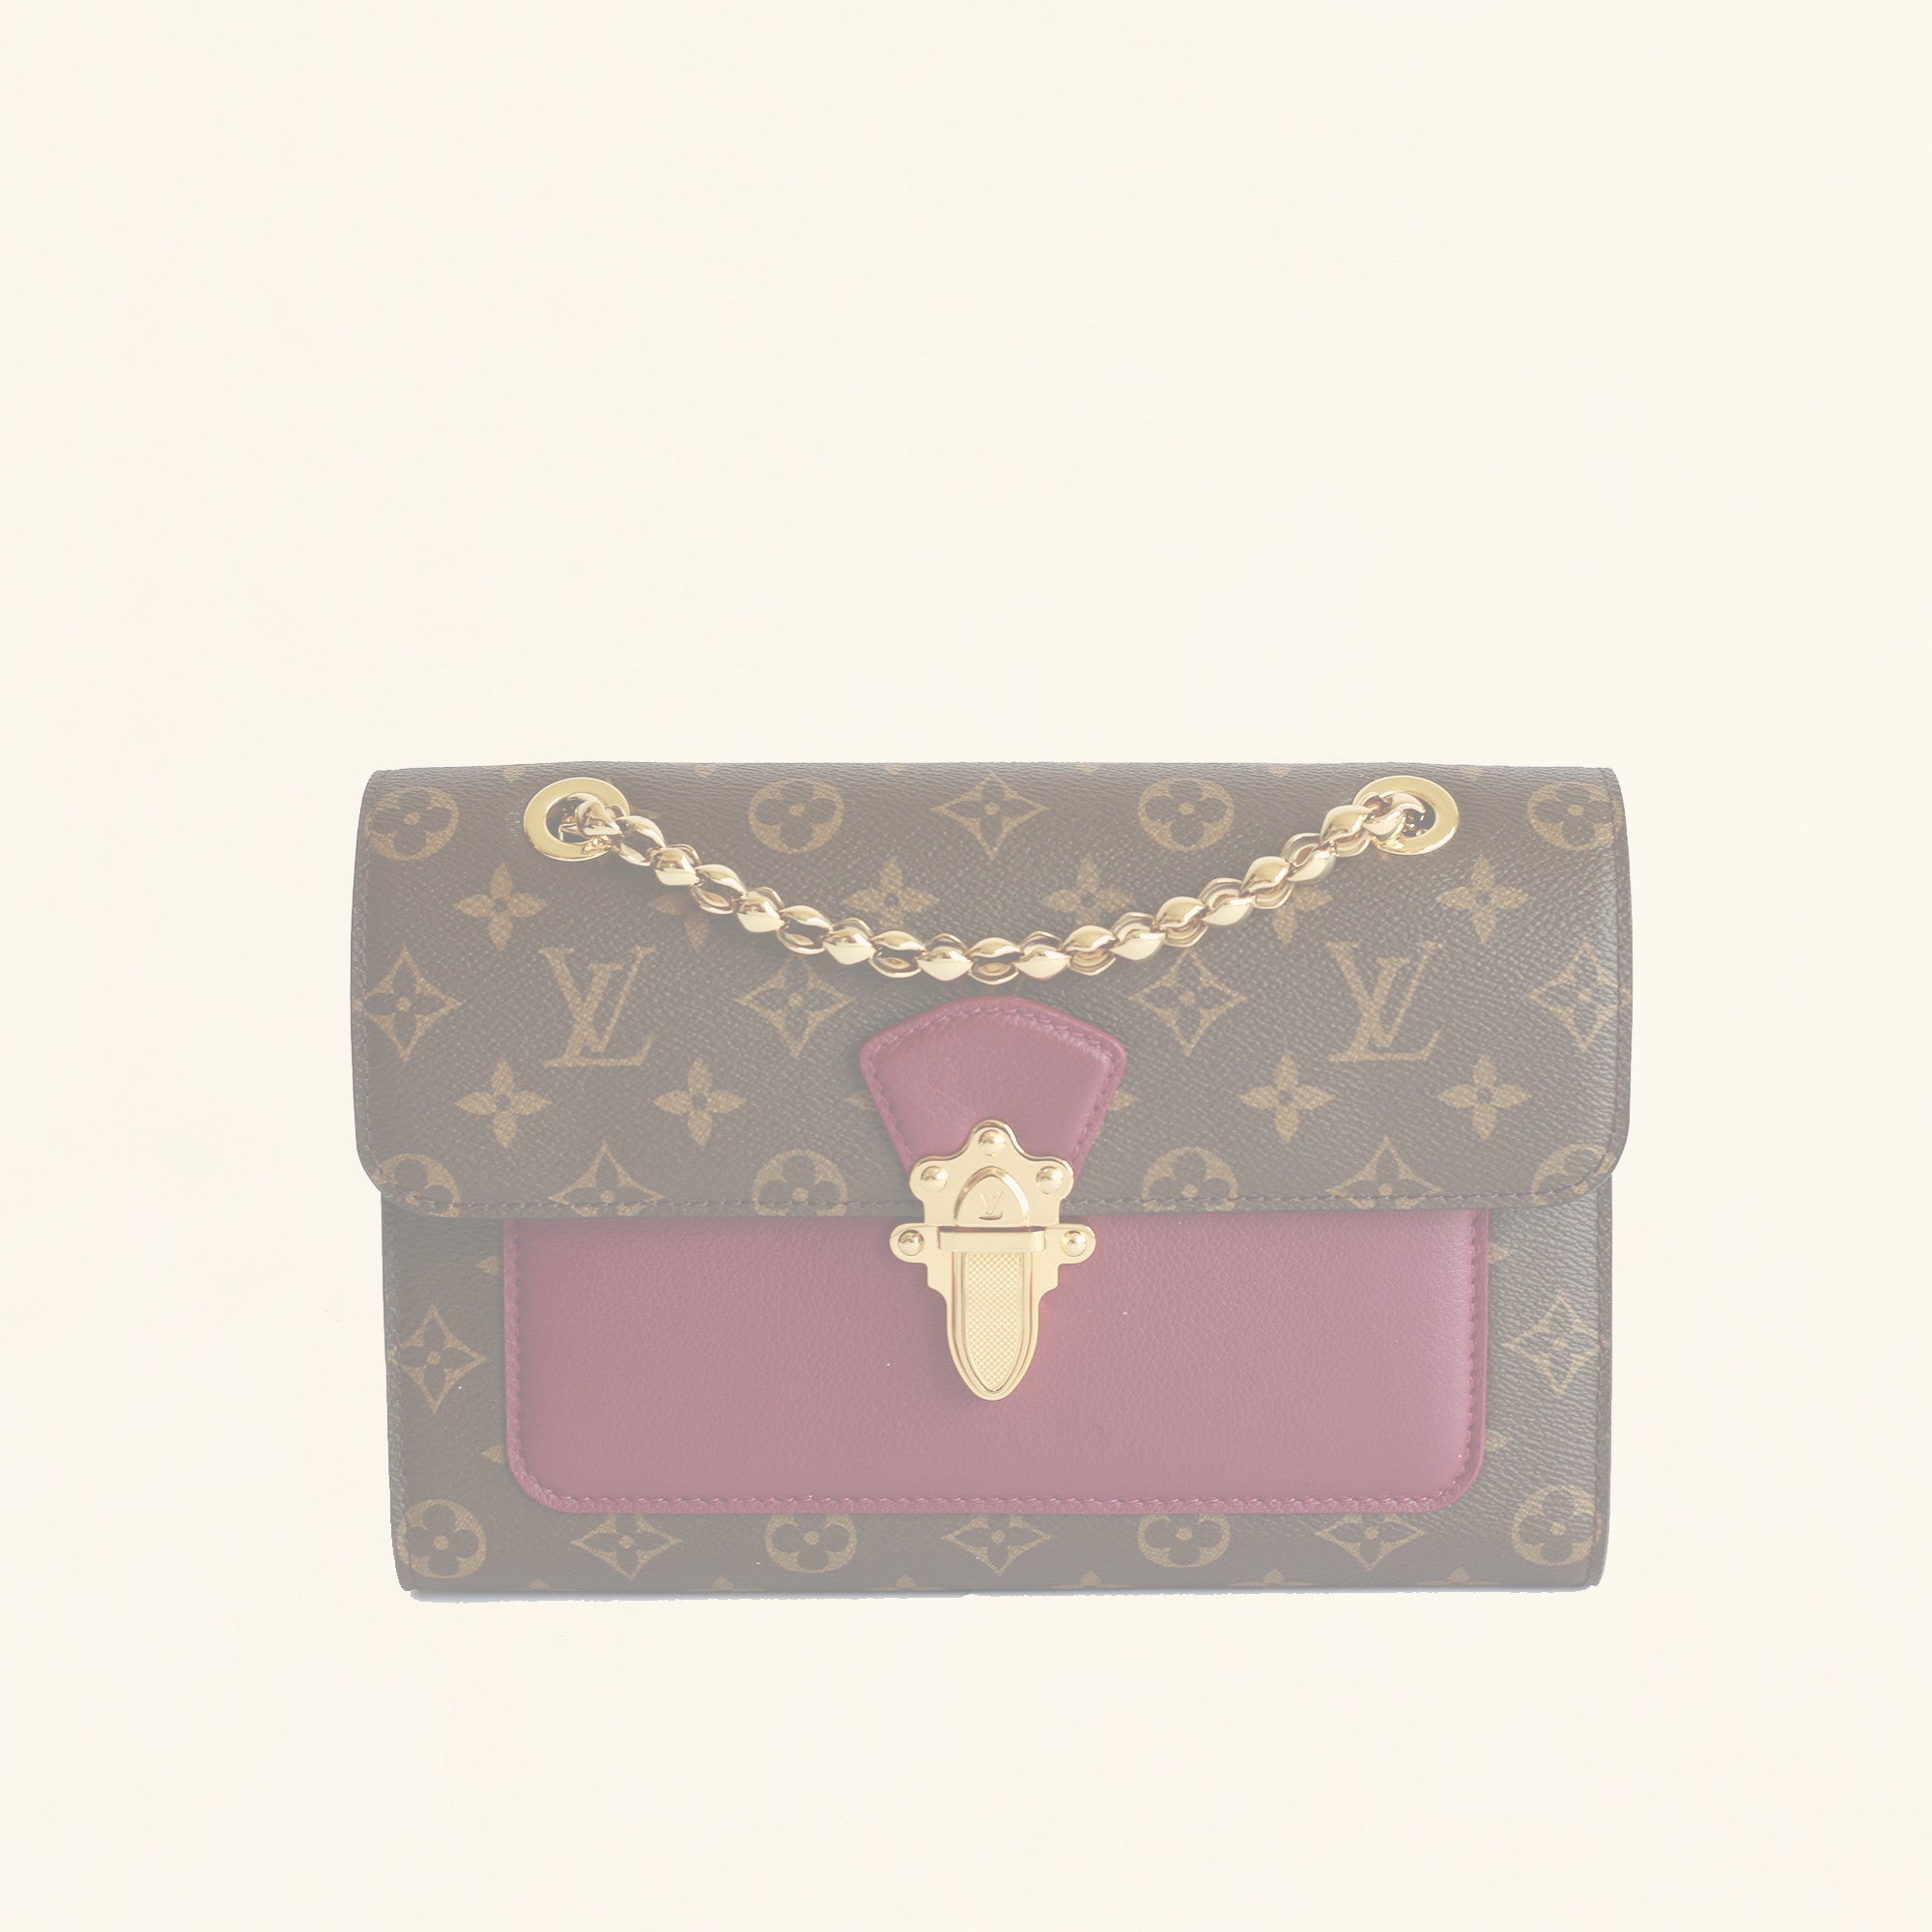 Louis Vuitton Victoire Review - A Classic Flap Bag Style in LV Monogram  Canvas 